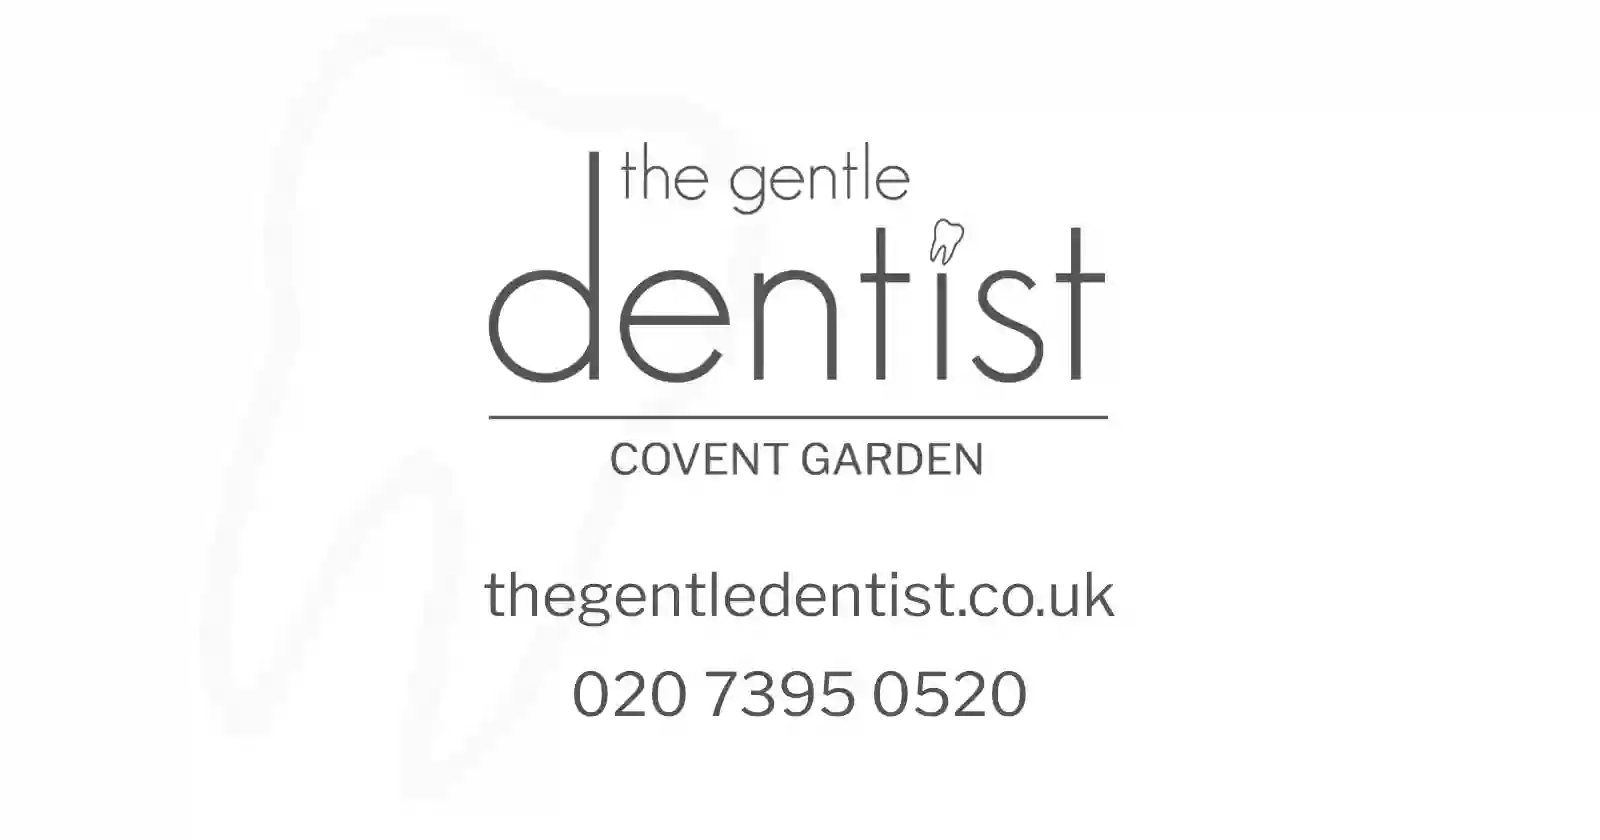 The gentle dentist